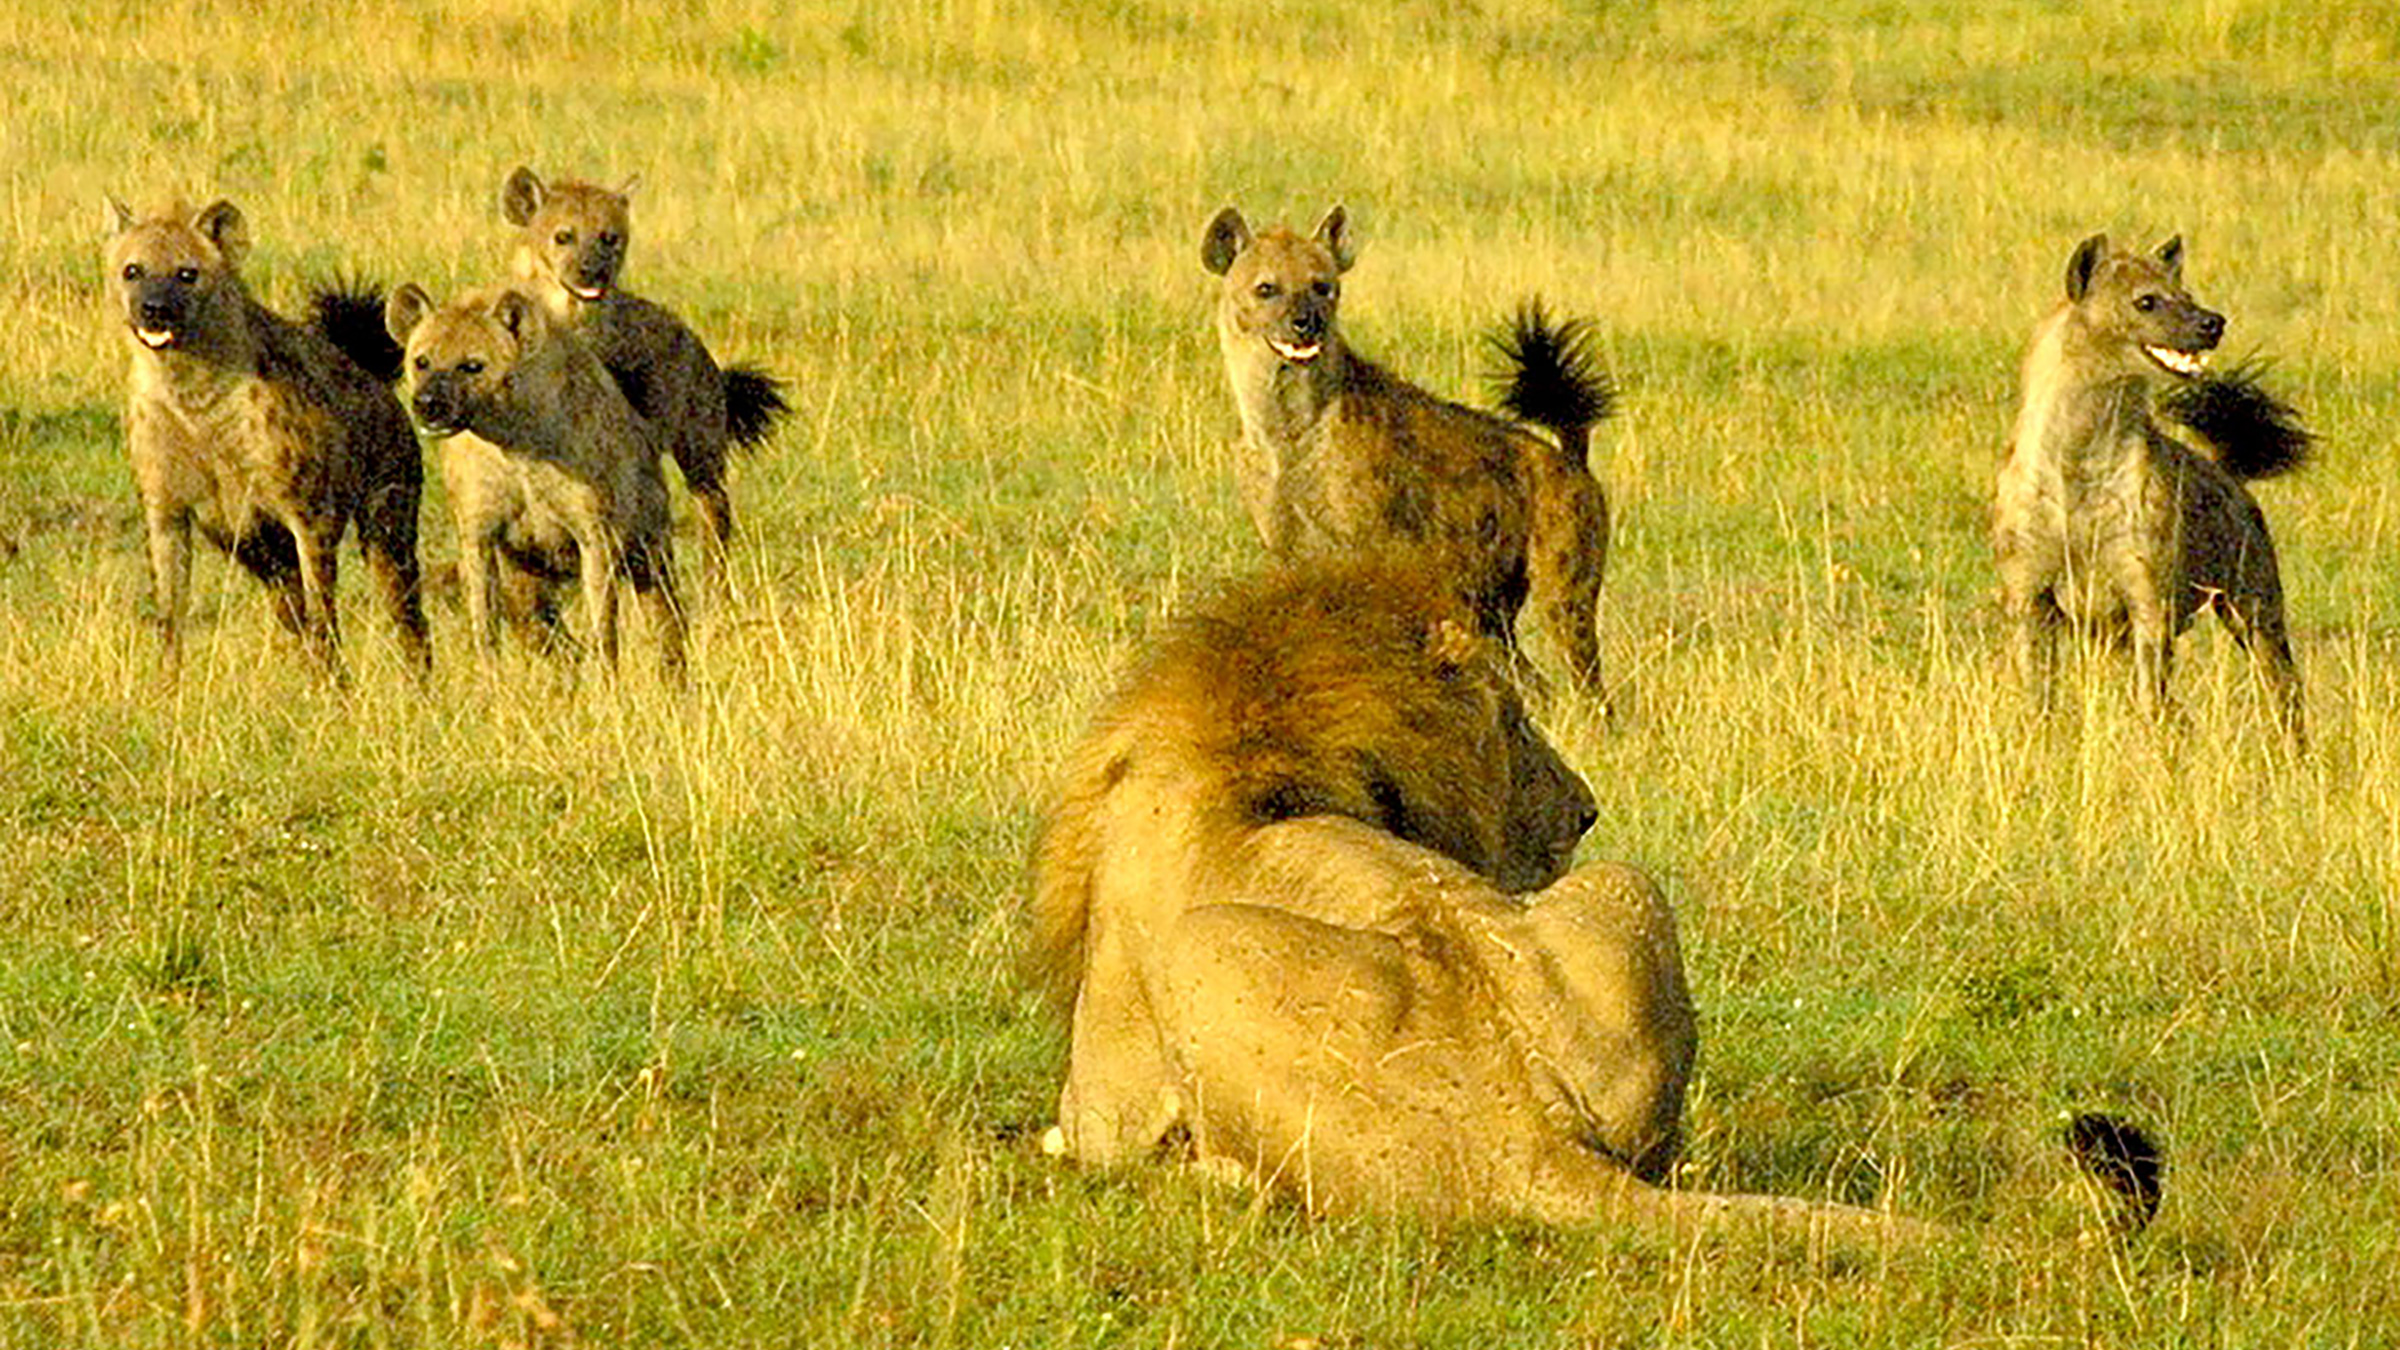 A lion faces a mob of hyenas